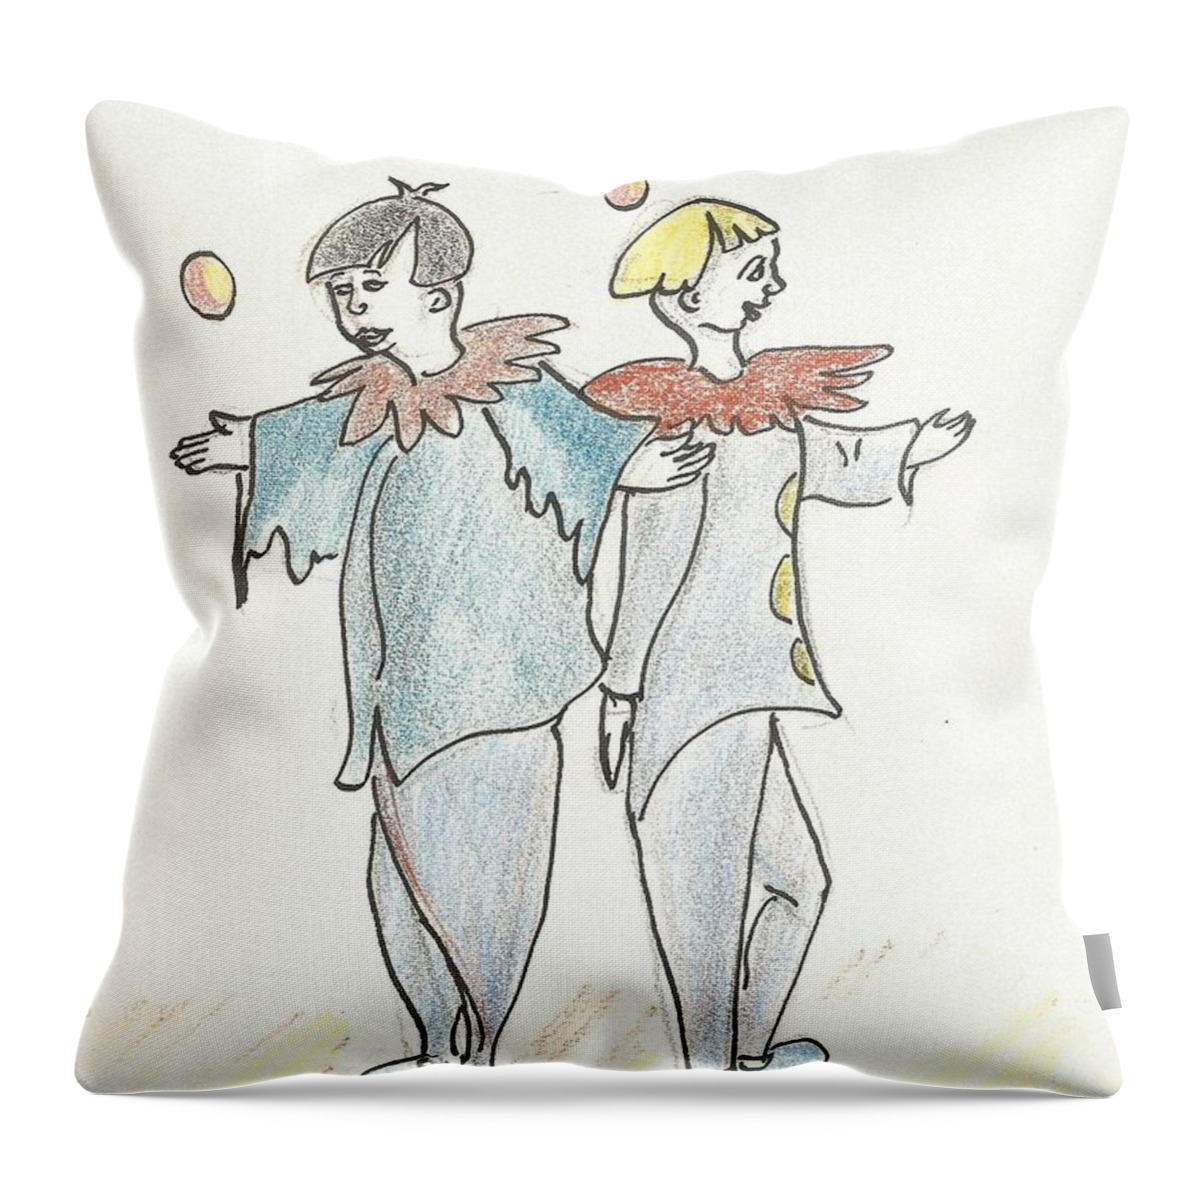 Clown Throw Pillow featuring the drawing Clowns by Gabriel Coelho